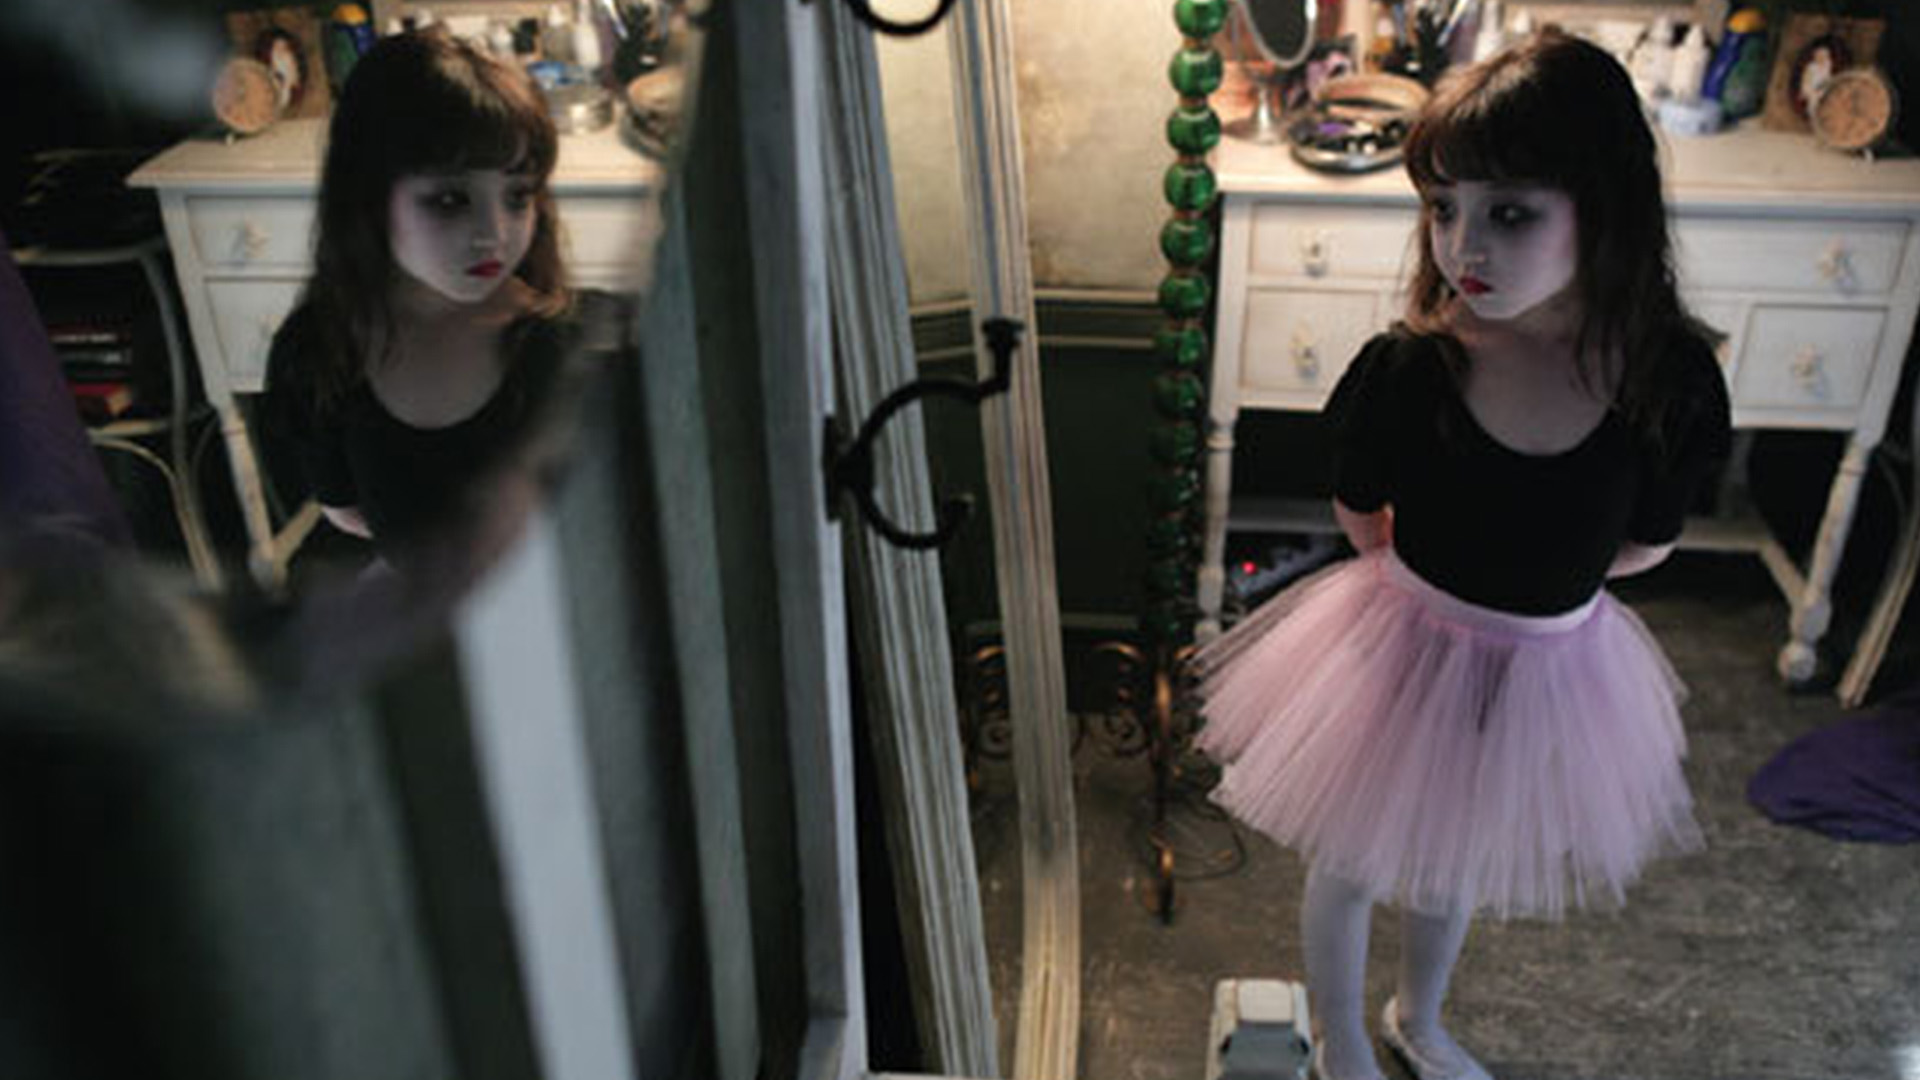 Scary Ballerina Girl